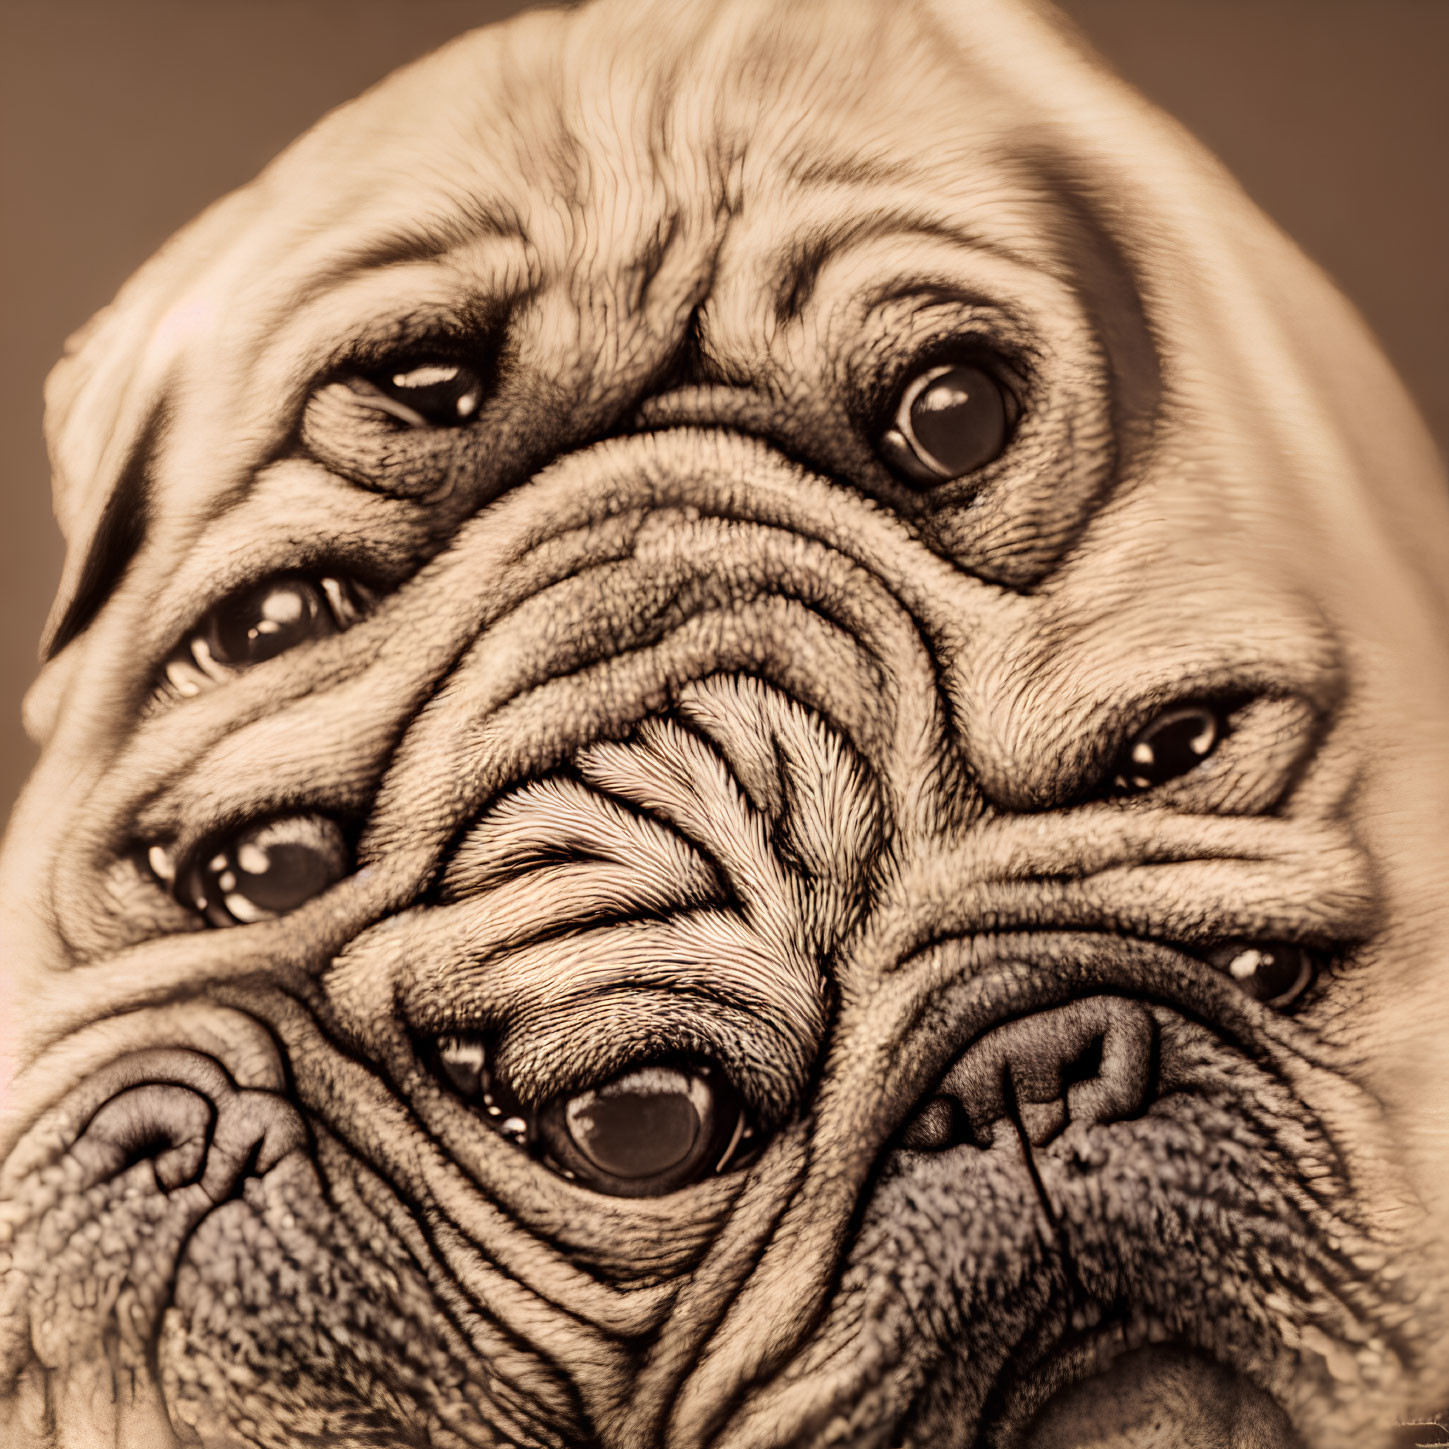 Detailed Close-Up Illustration of Wrinkled Pug with Big Eyes